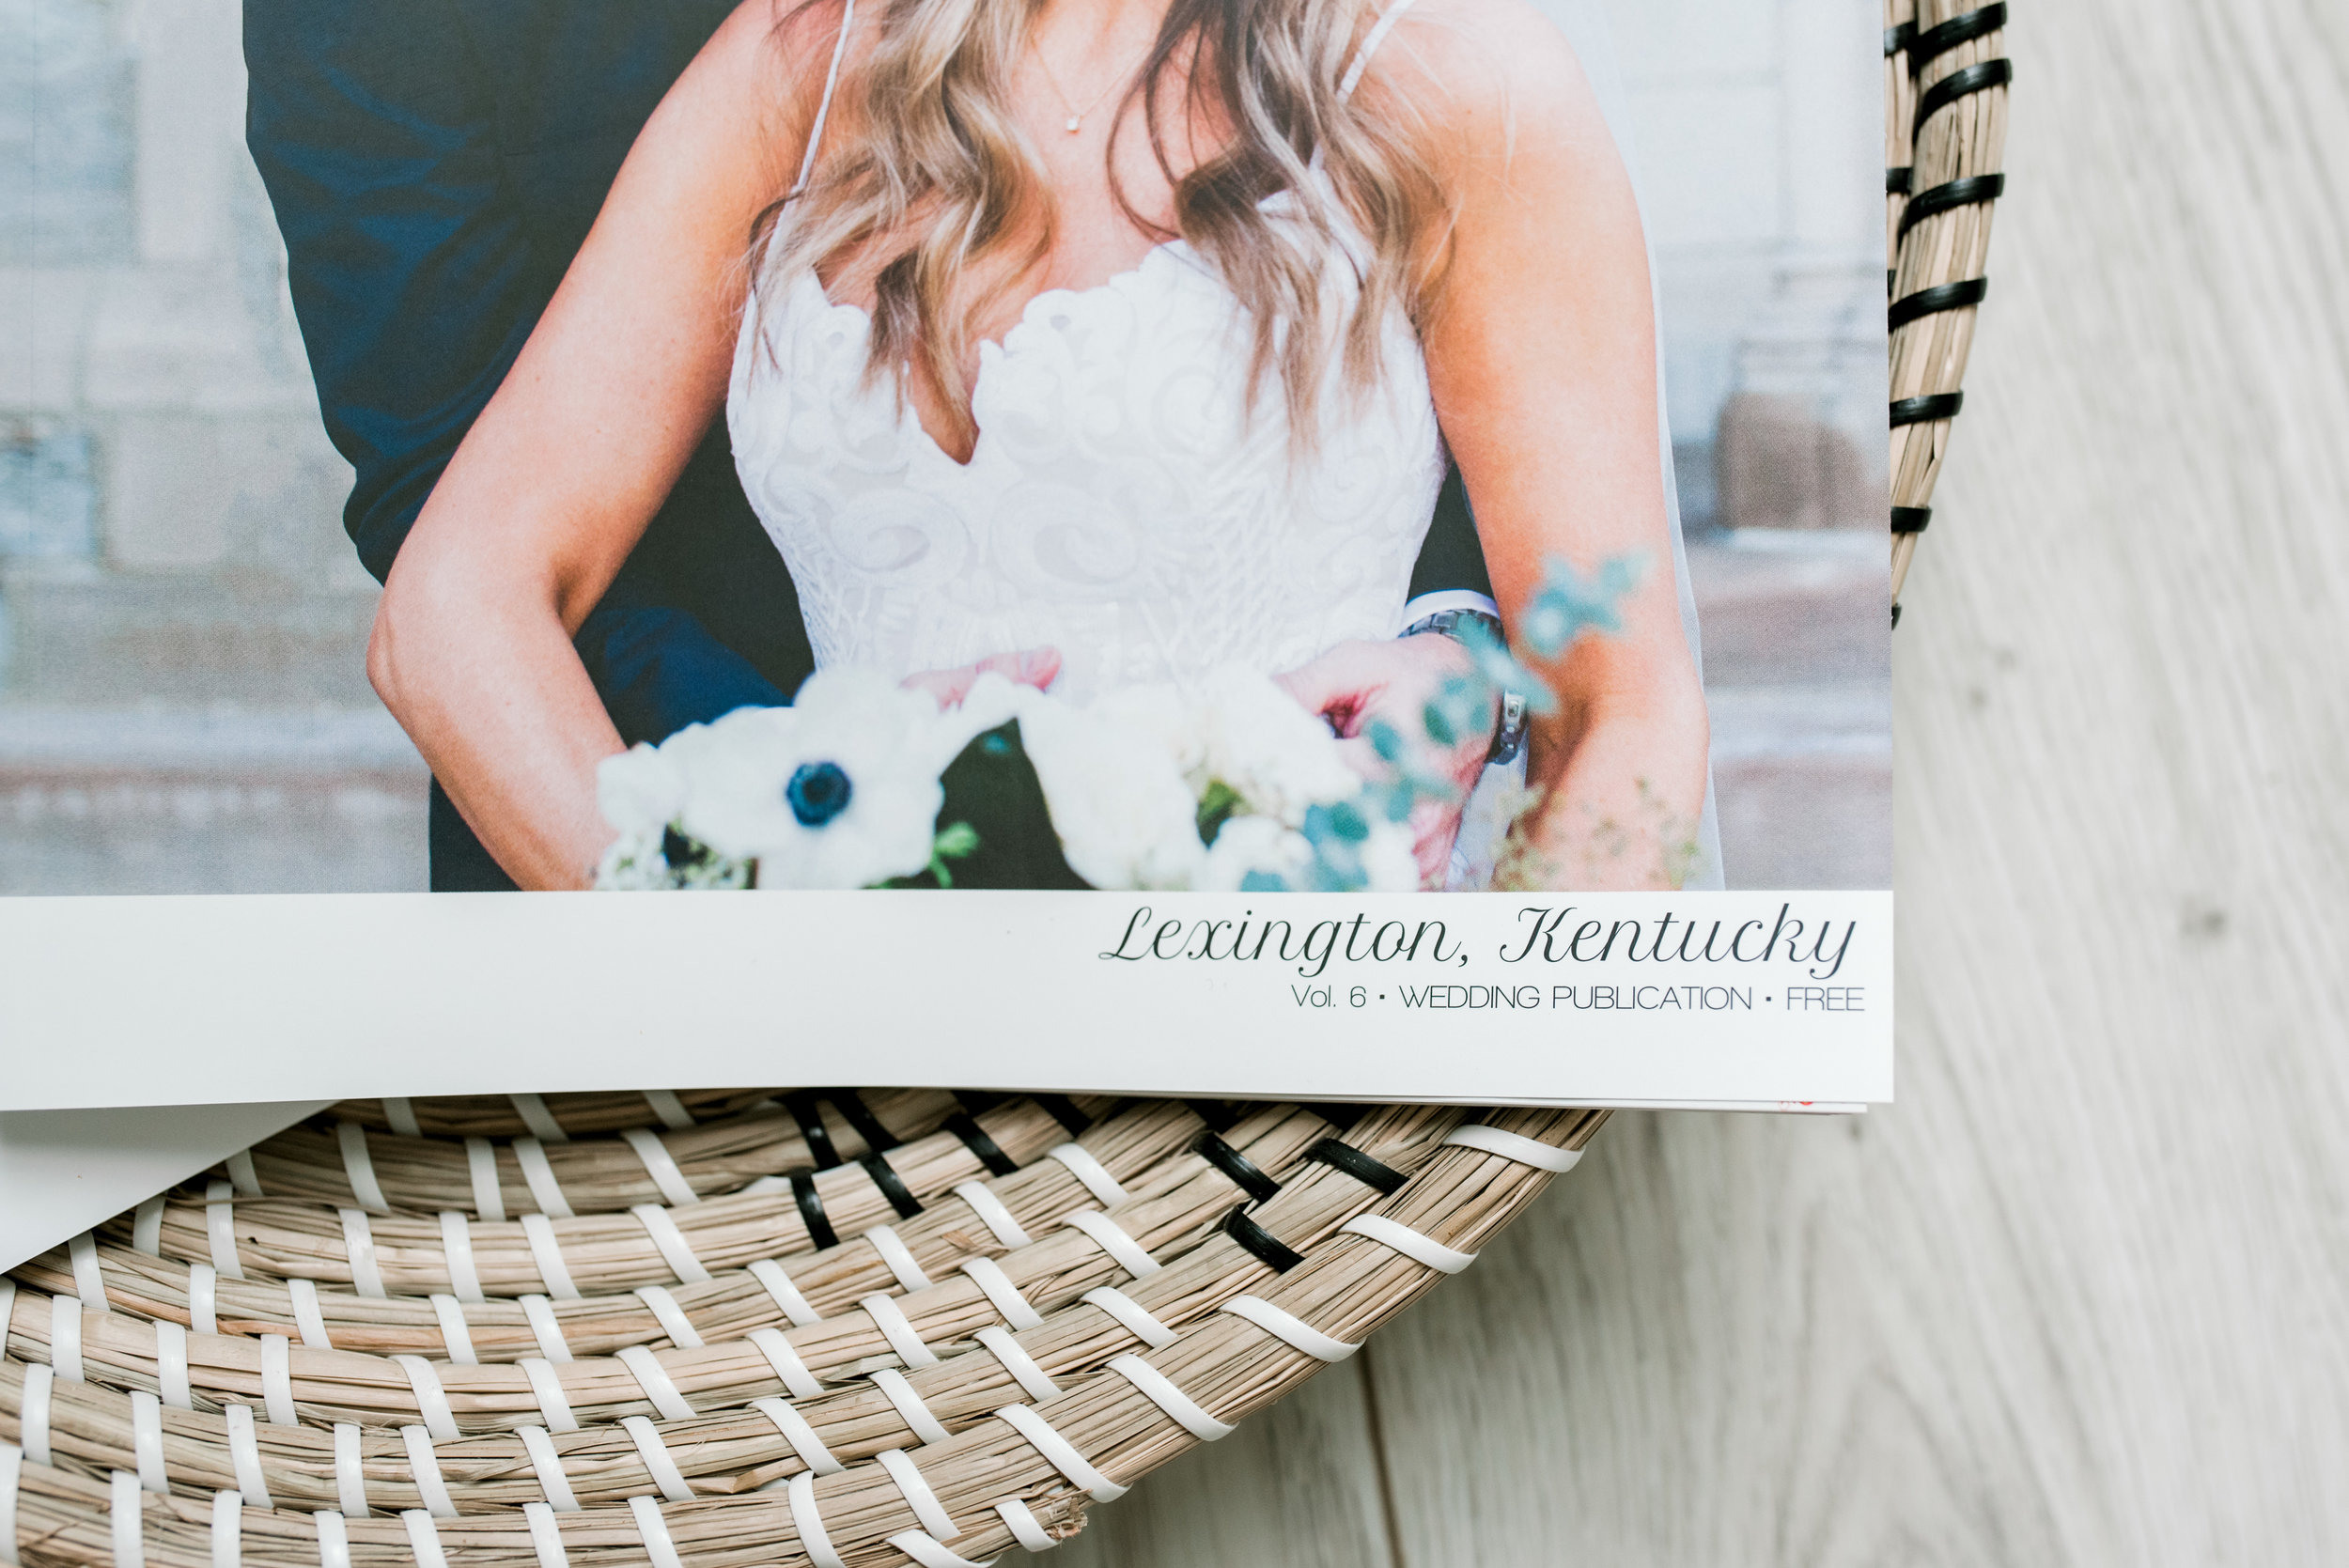 lexington-wedding-photographer-featured